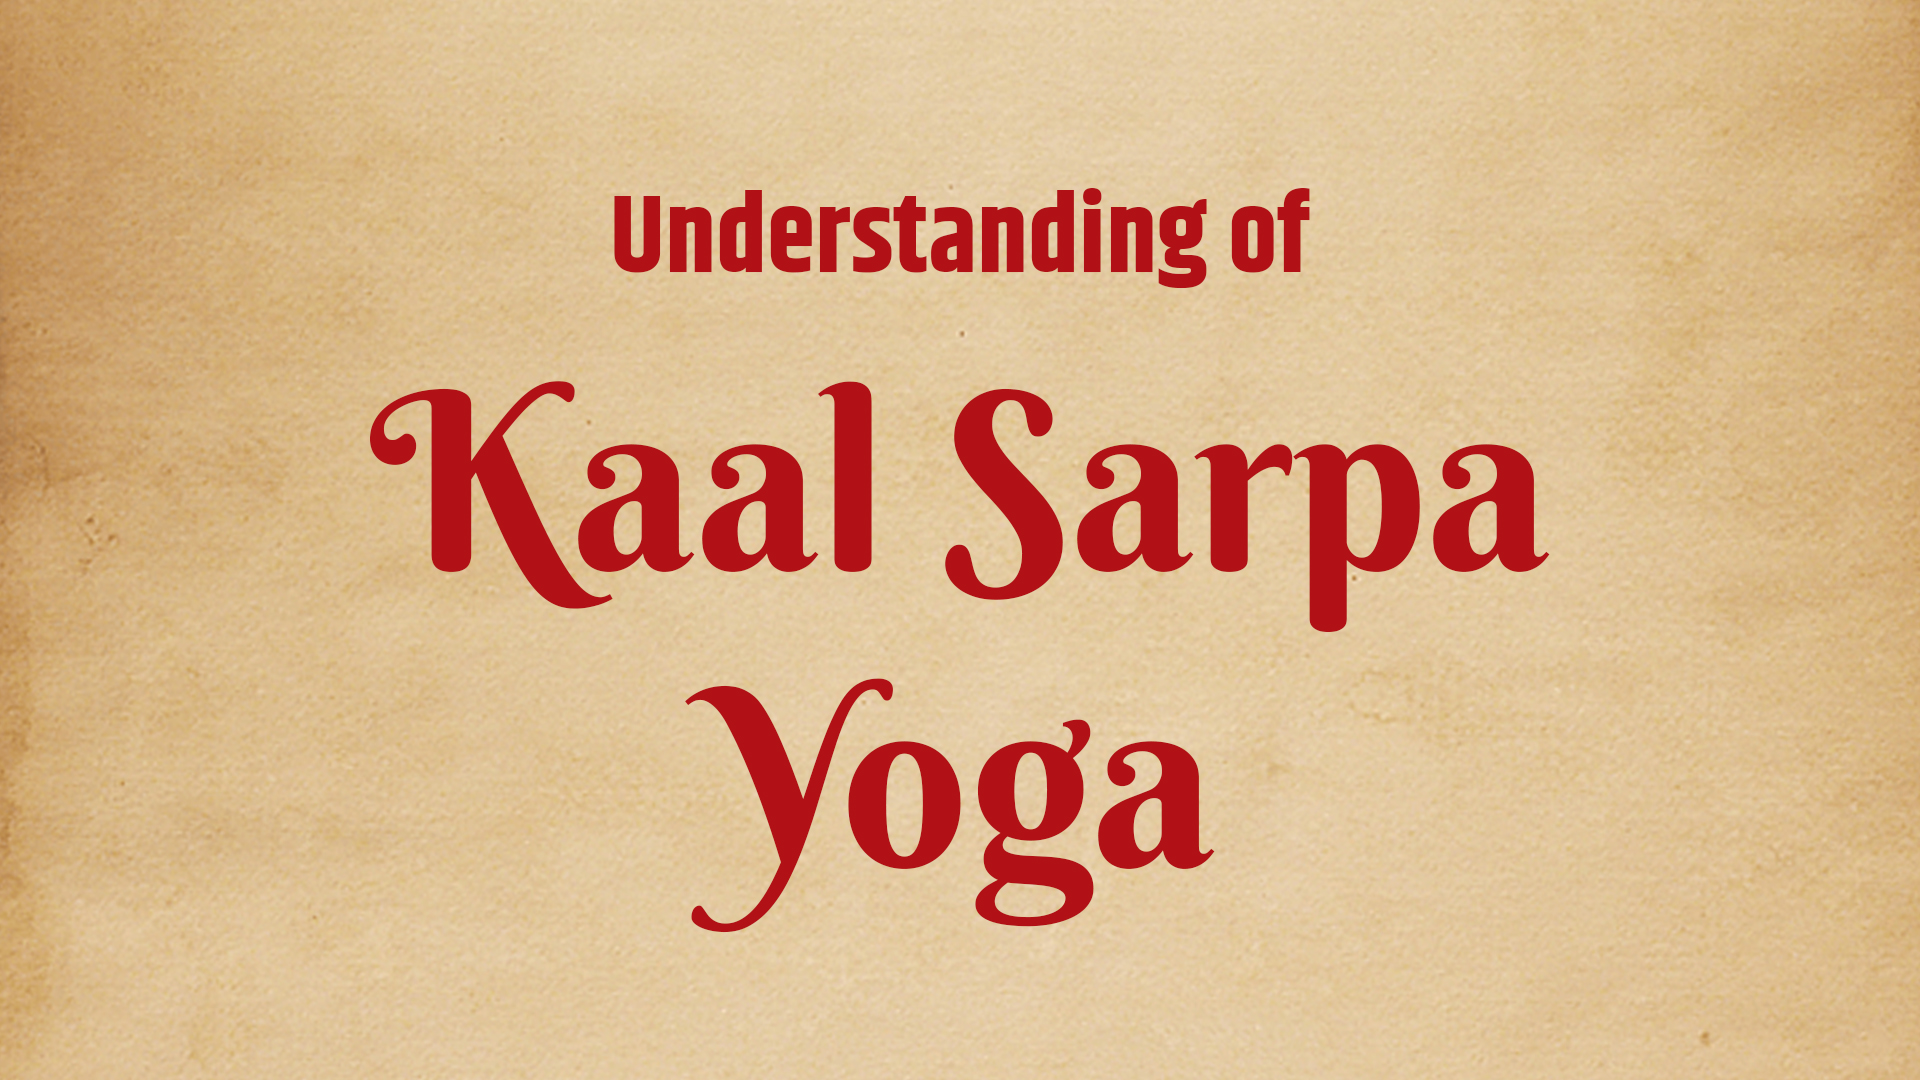 Understanding of Kaal Sarpa Yoga